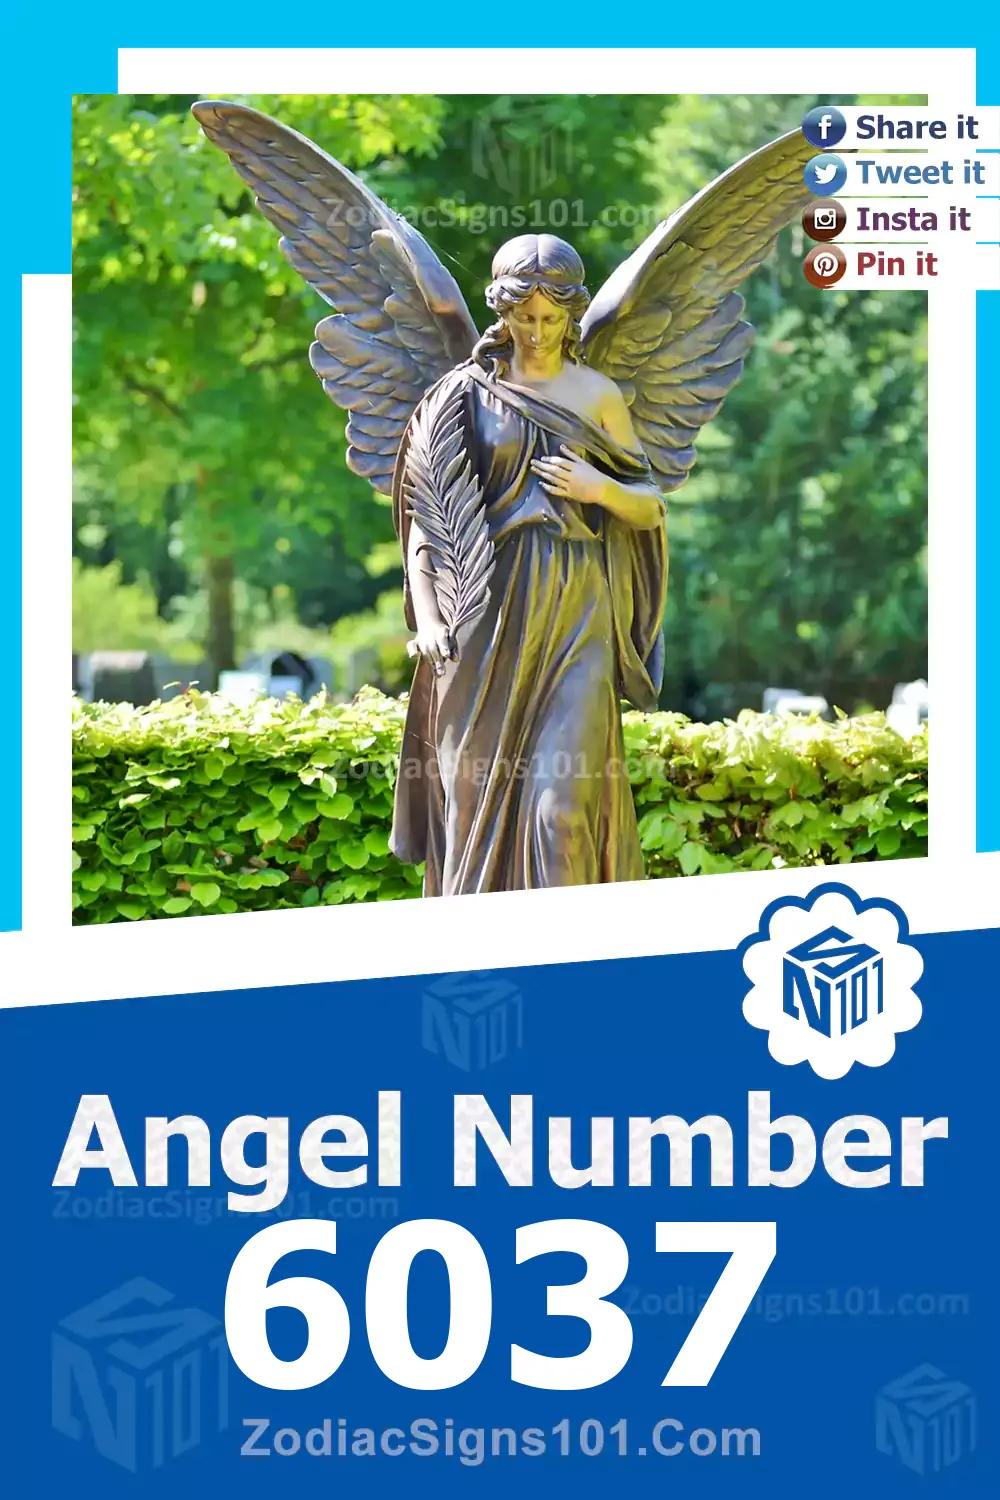 6037-Angel-Number-Meaning.jpg